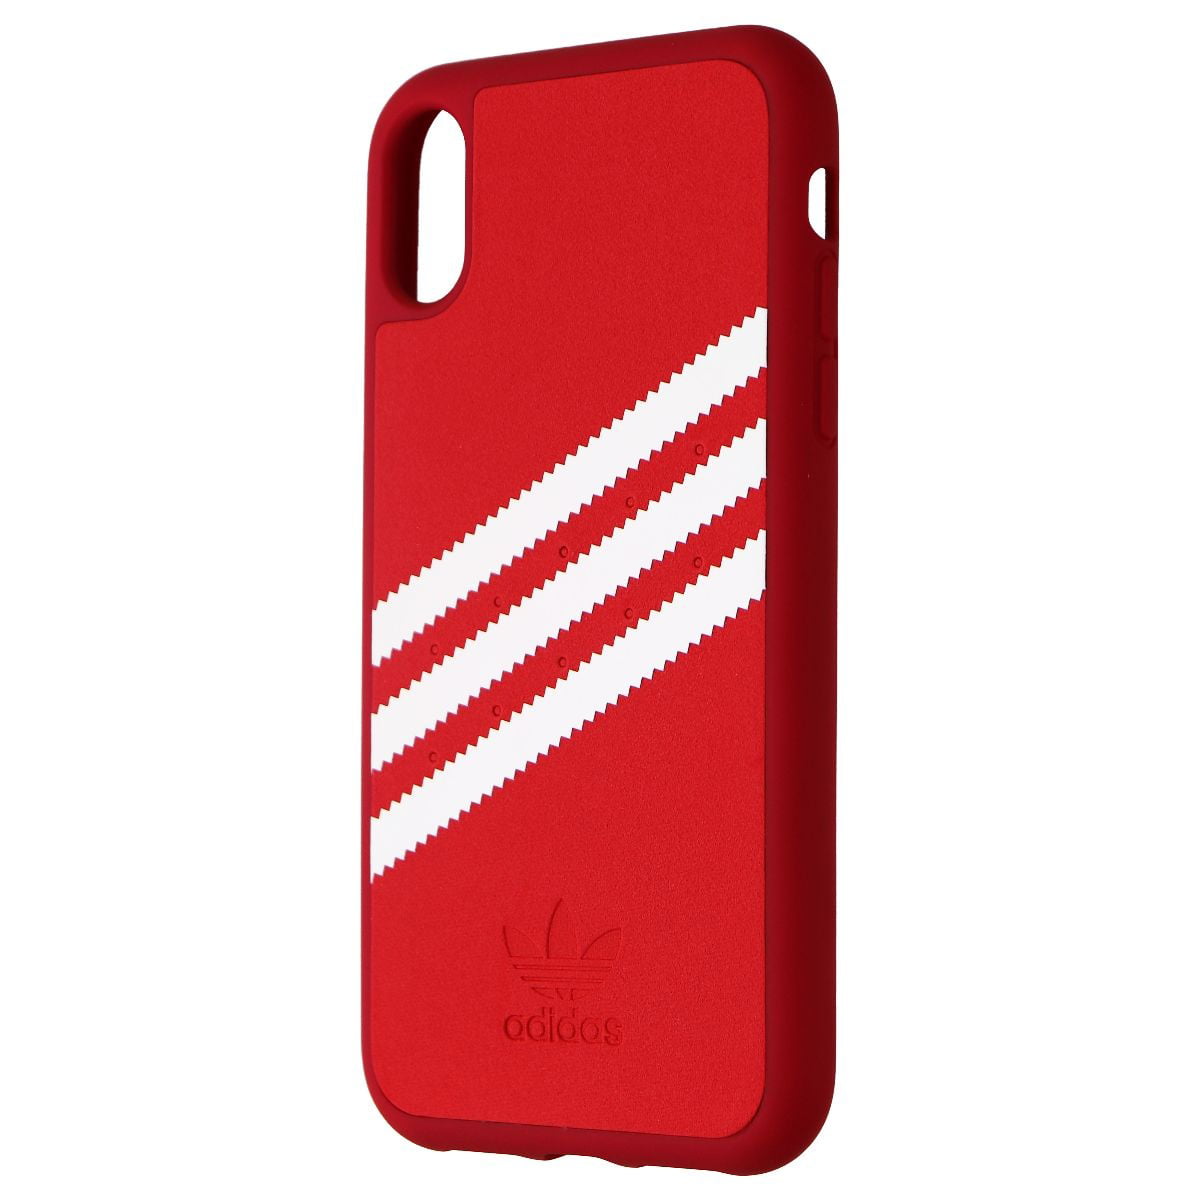 Onderzoek Oceanië Fysica Adidas 3-Strips Snap Case for Apple iPhone XR Smartphones - Red/White  Stripe - Walmart.com